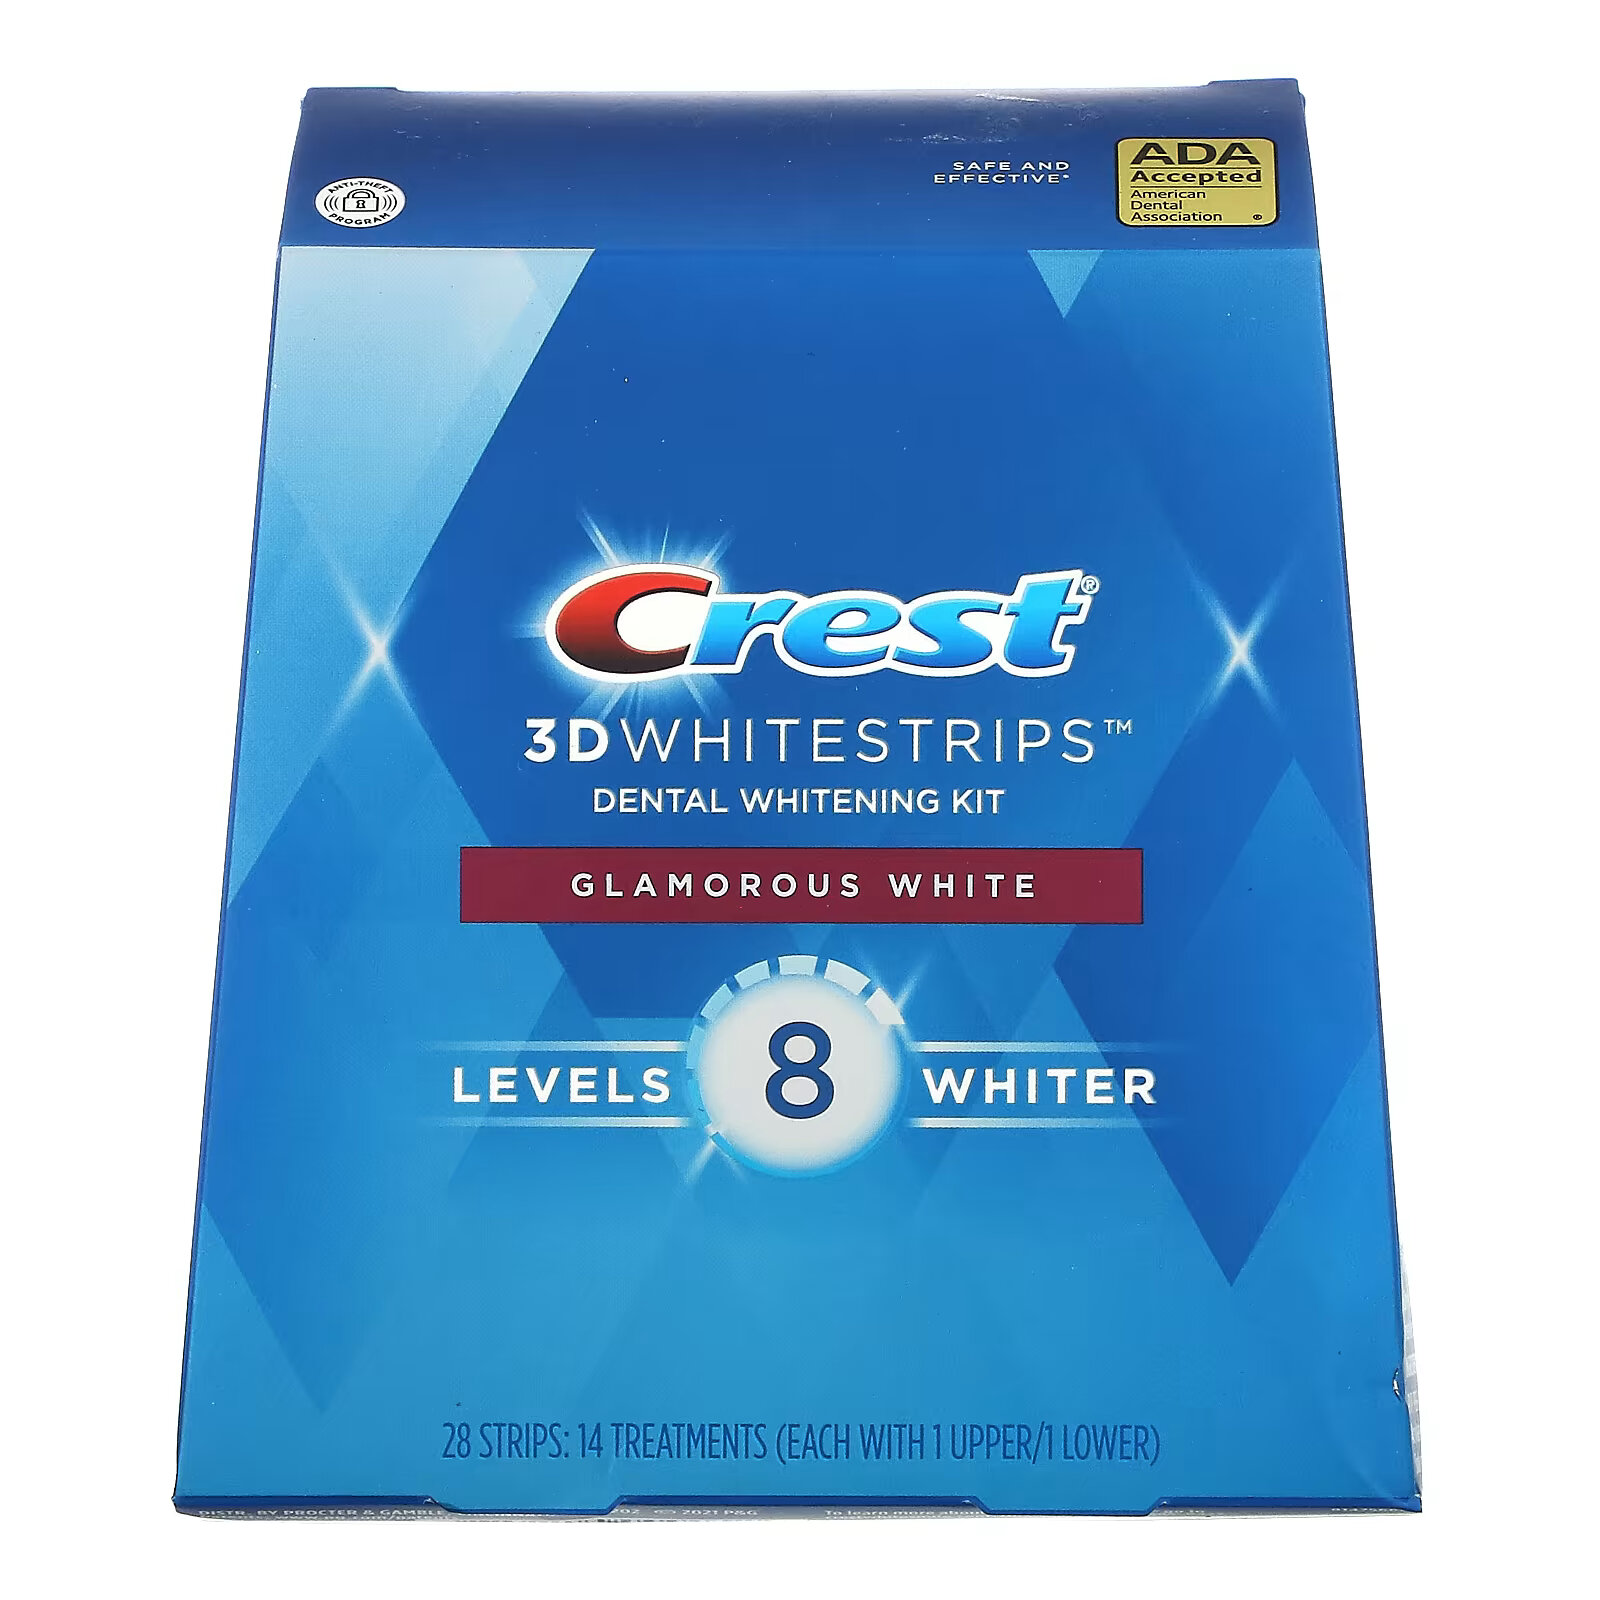 Crest, 3D Whitestrips, Glamorous White, комплект для отбеливания зубов, 28 полосок набор для отбеливания зубов crest 3d white